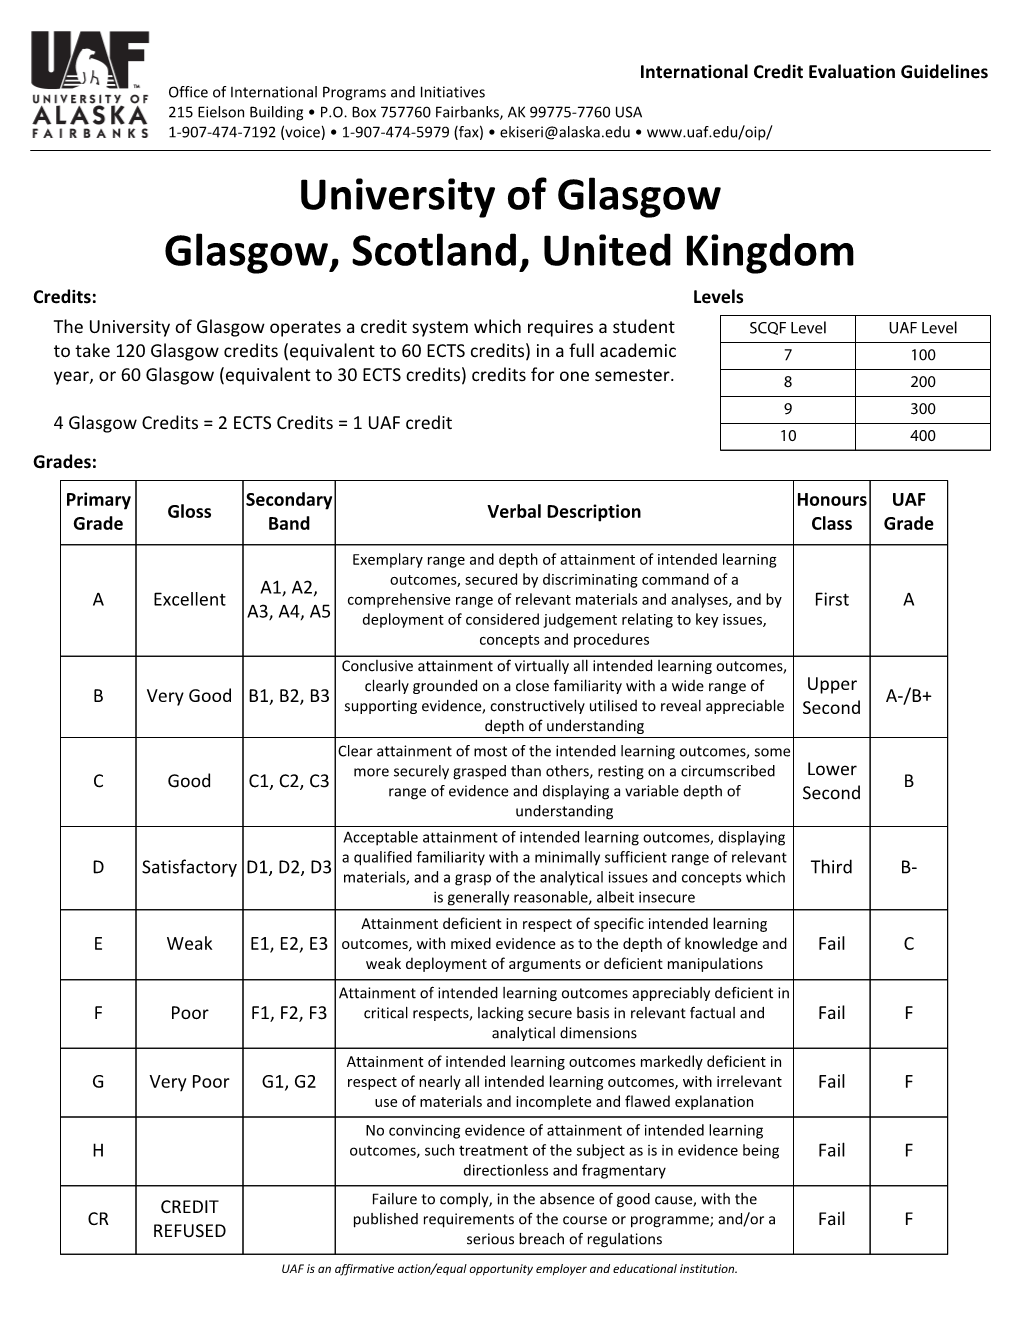 University of Glasgow Glasgow, Scotland, United Kingdom